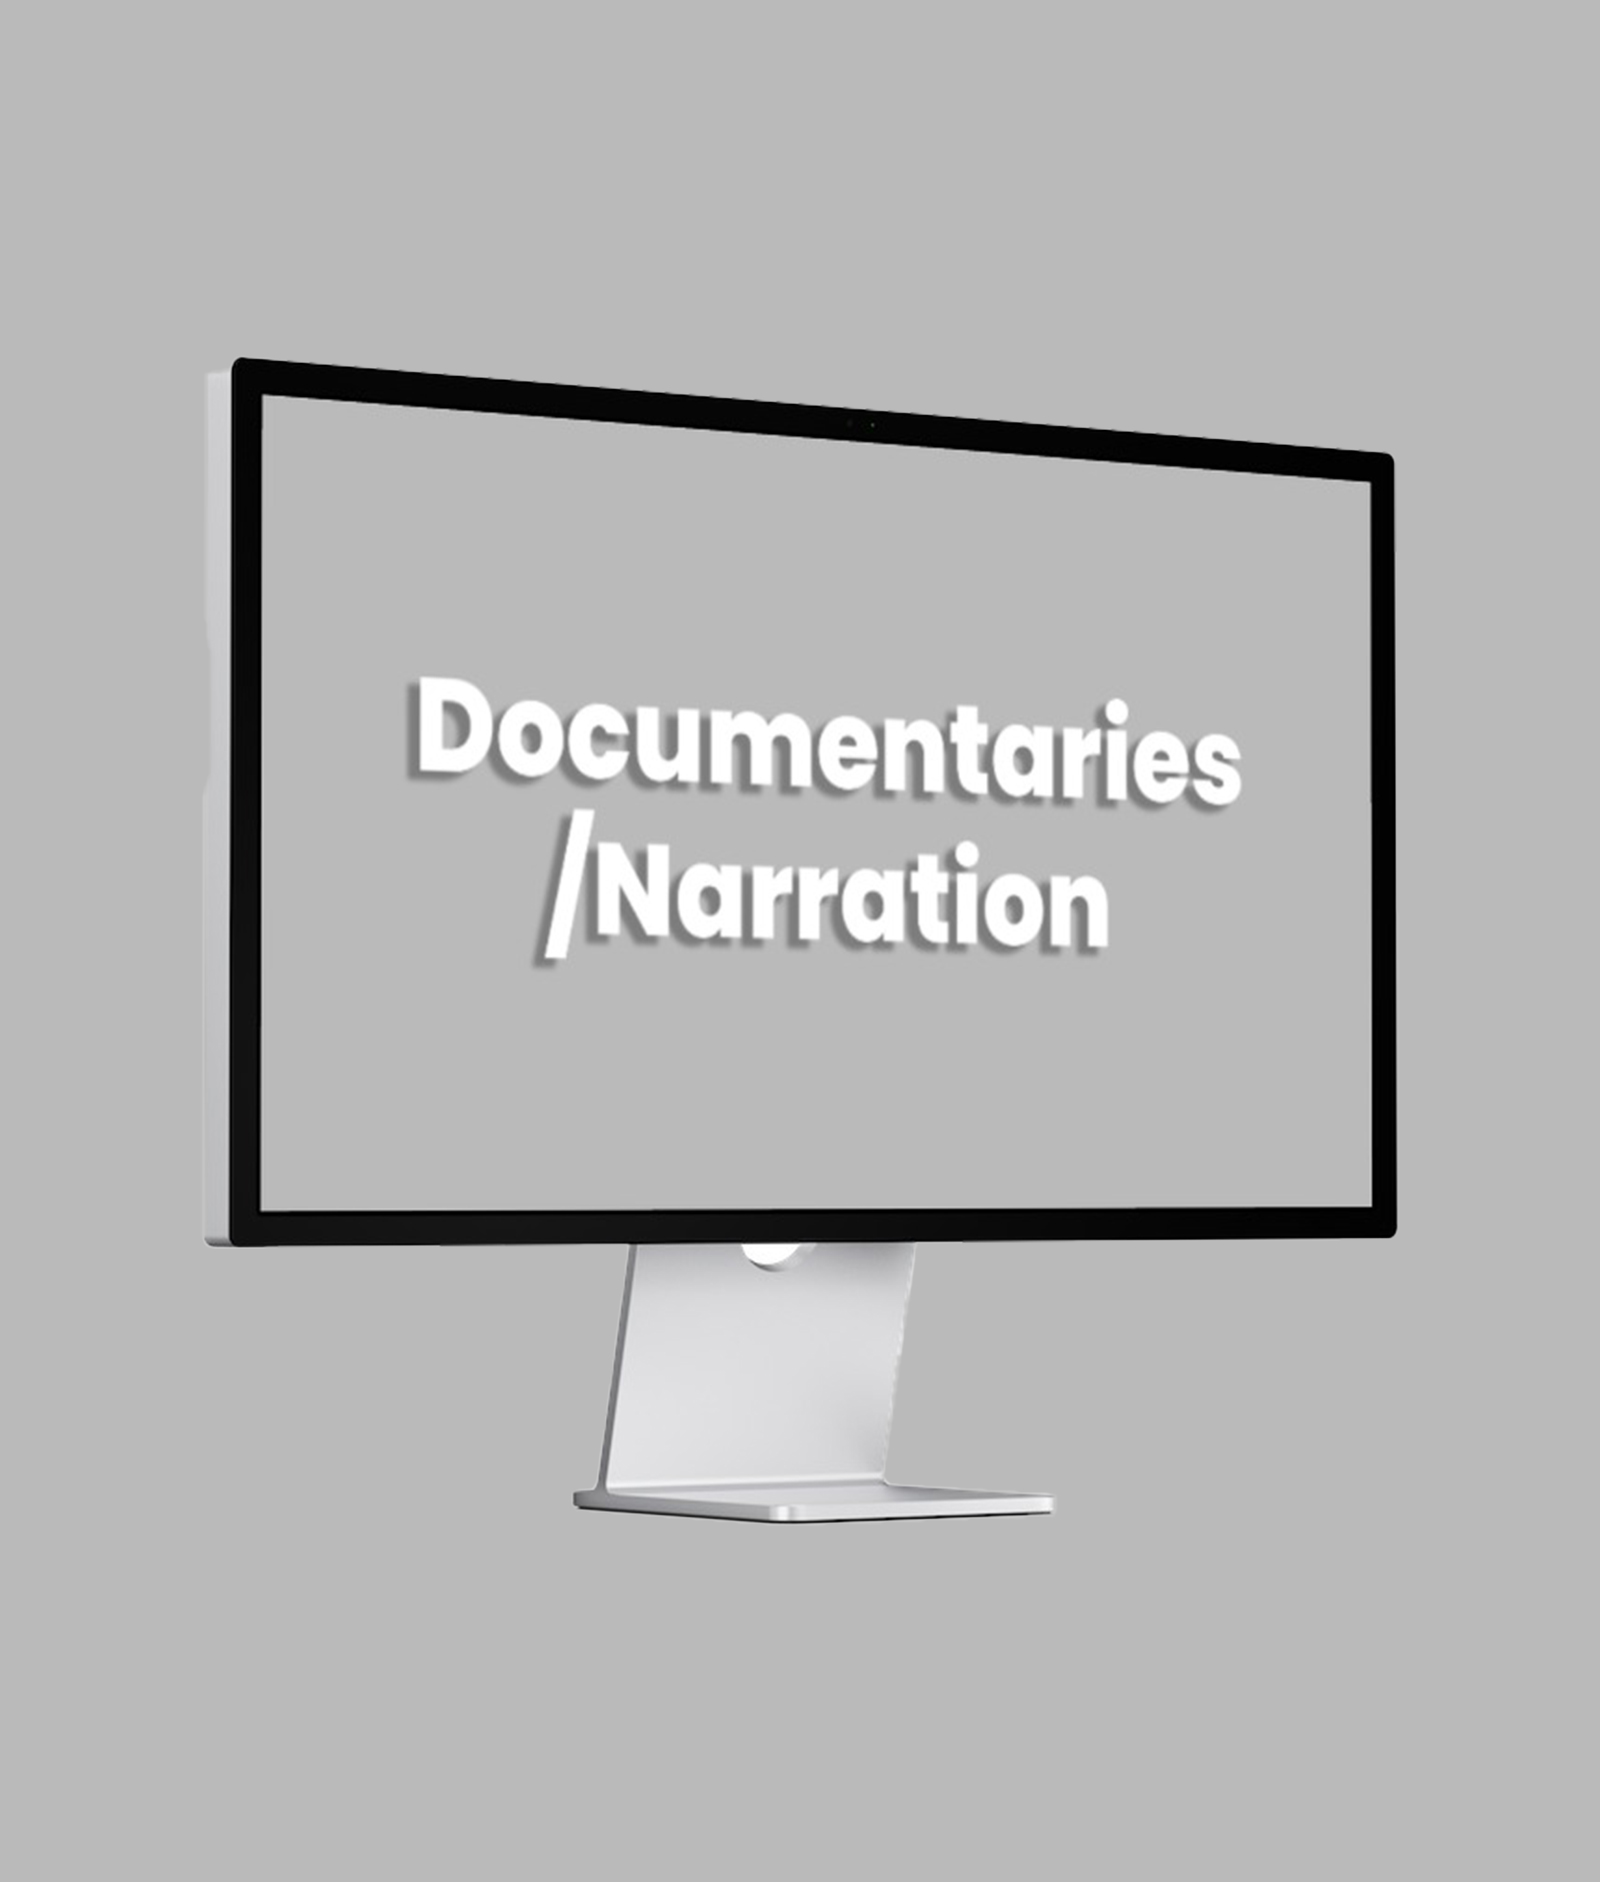 Documentaries/Narration